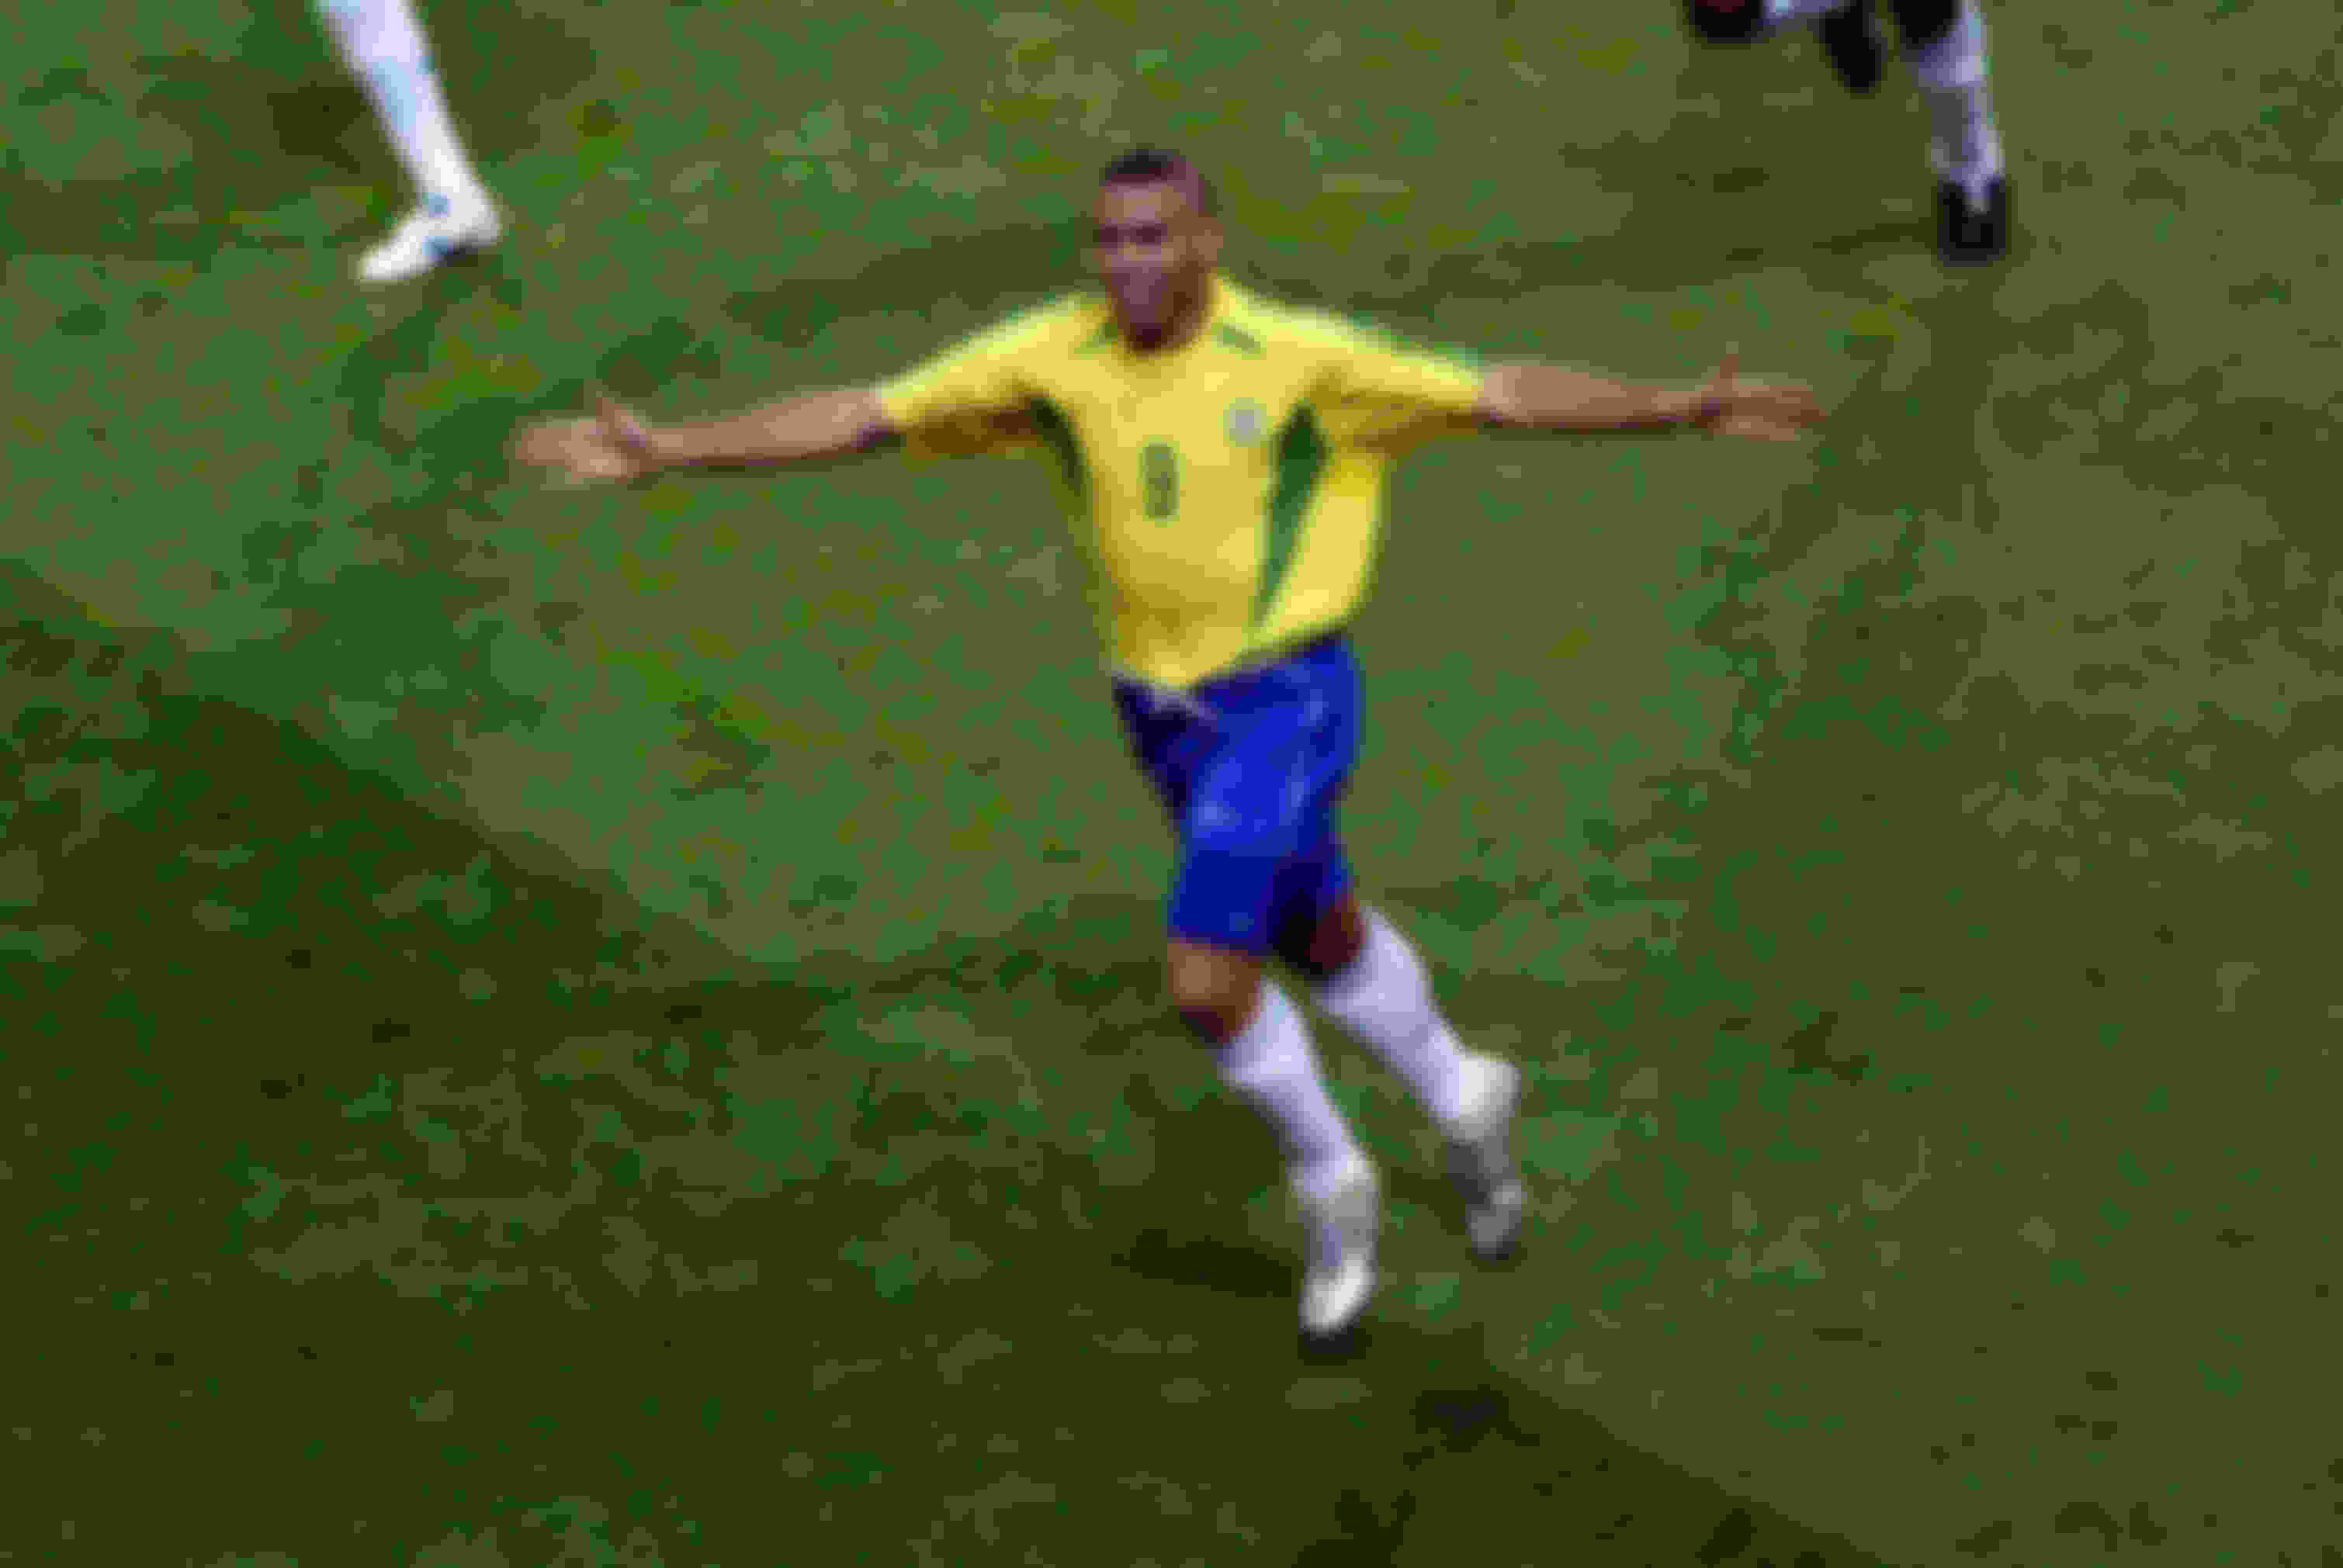 Brazil striker Ronaldo Nazario celebrates scoring a goal at the 2002 World Cup